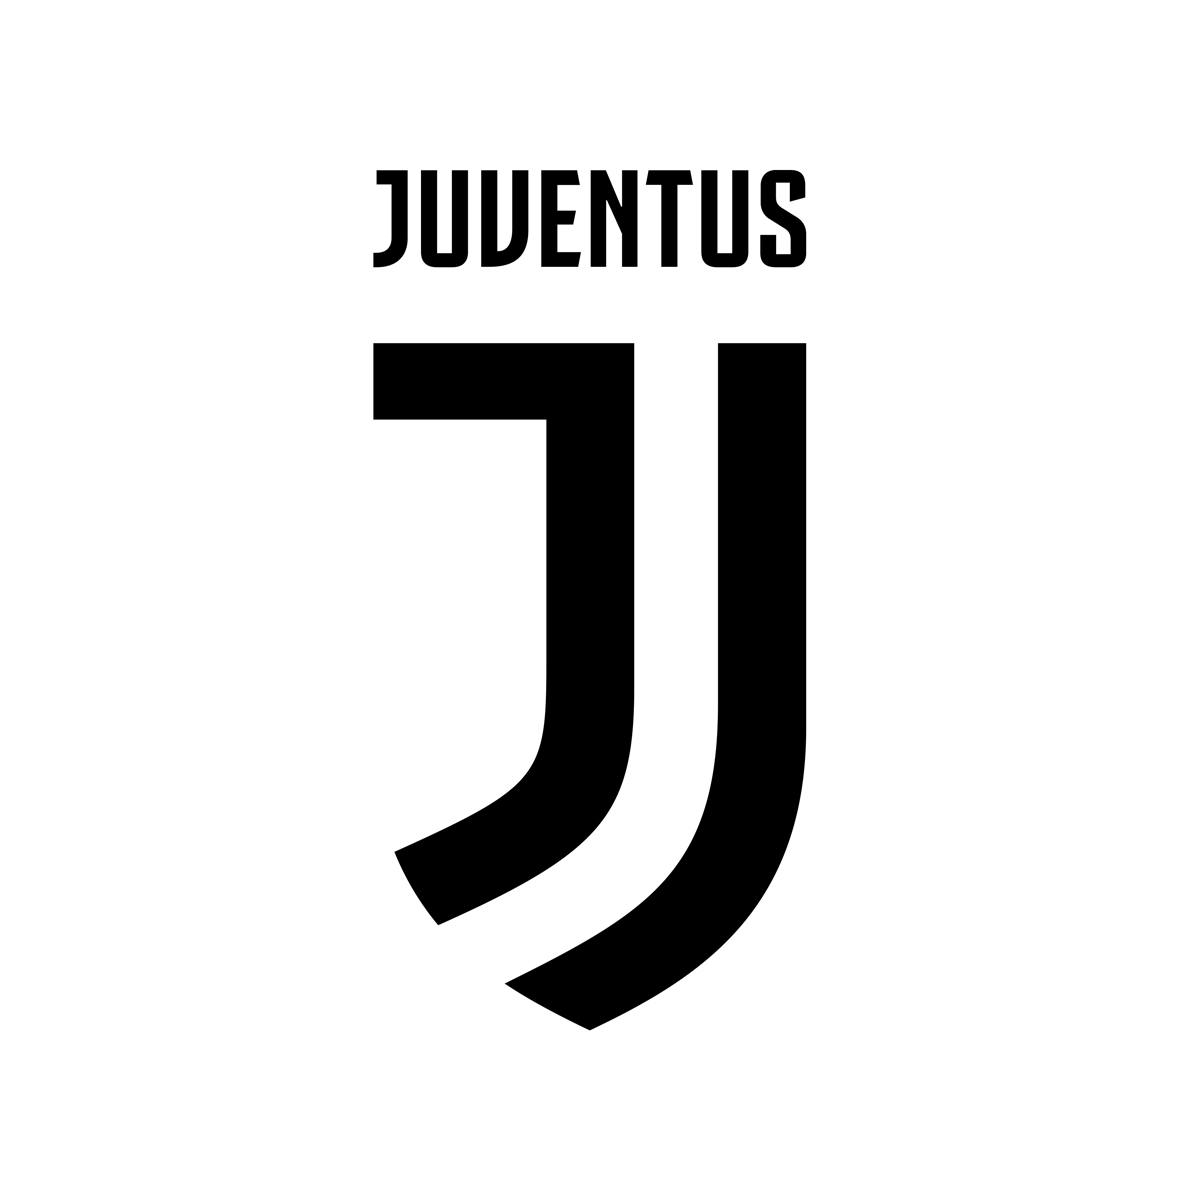 Juventus FC faces fan uprising after launching minimal new logo